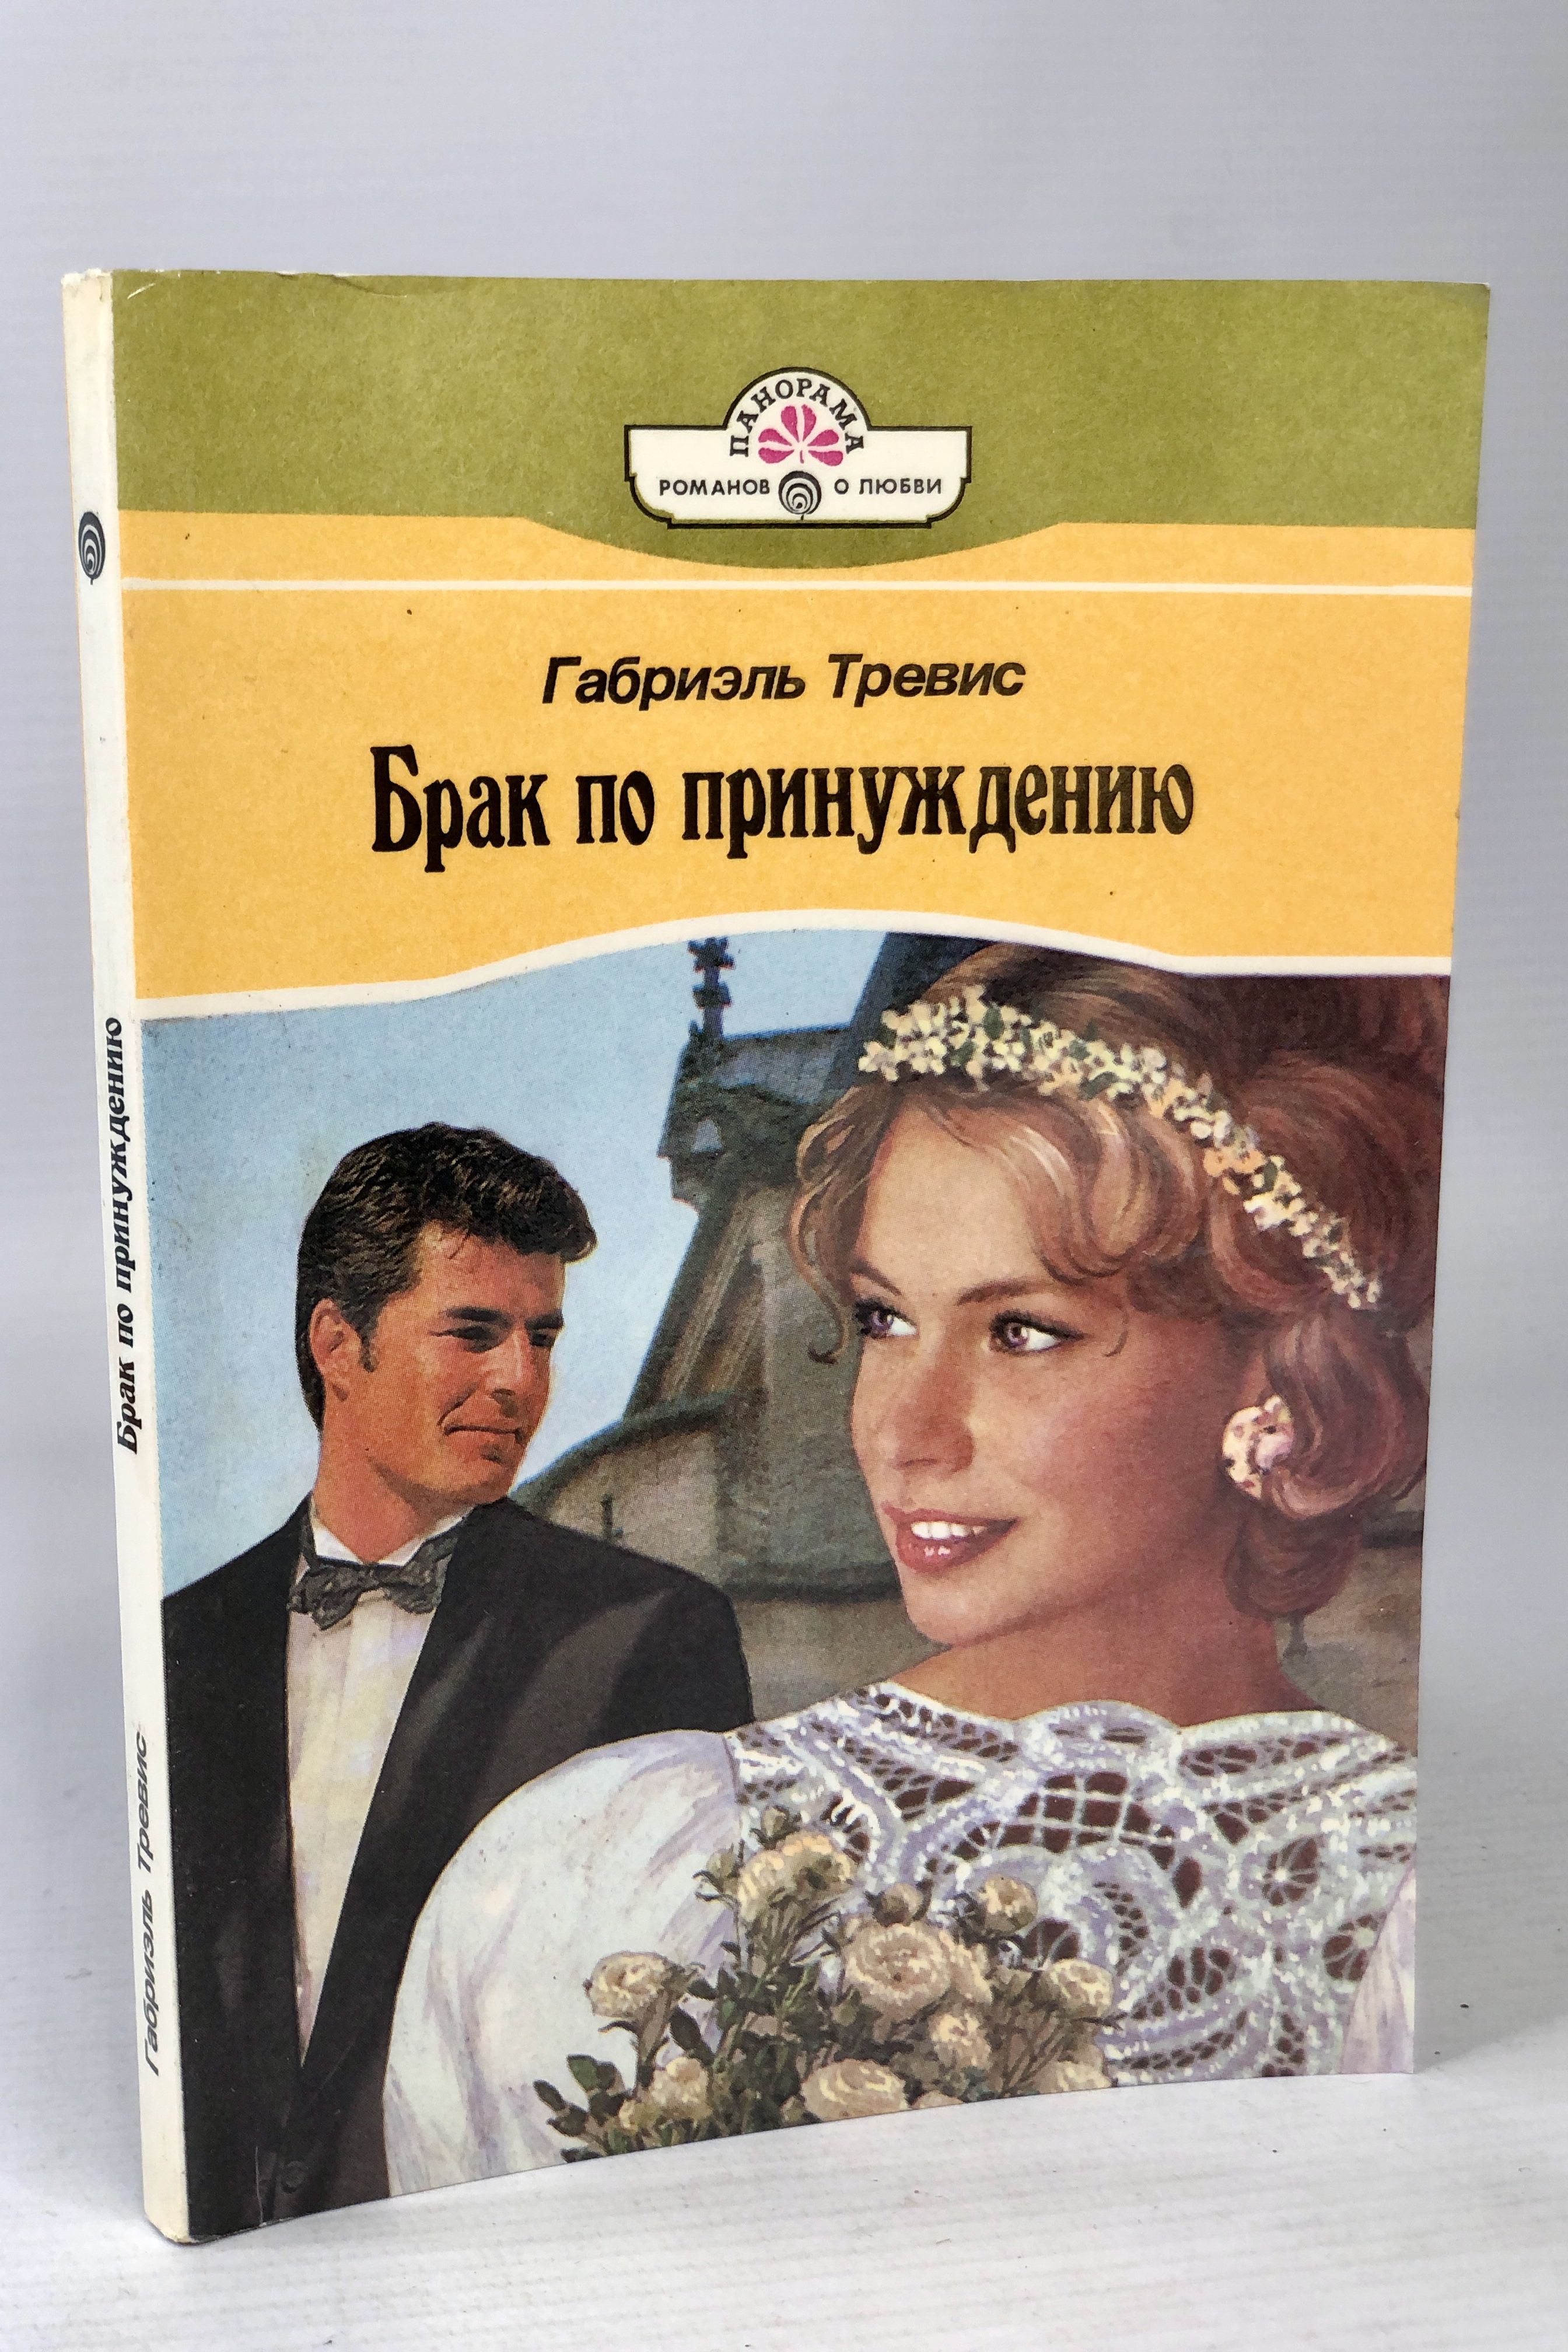 Книга замужество. Книга про брак. Книга про брак по принуждению популярная. Образцовое супружество книга.